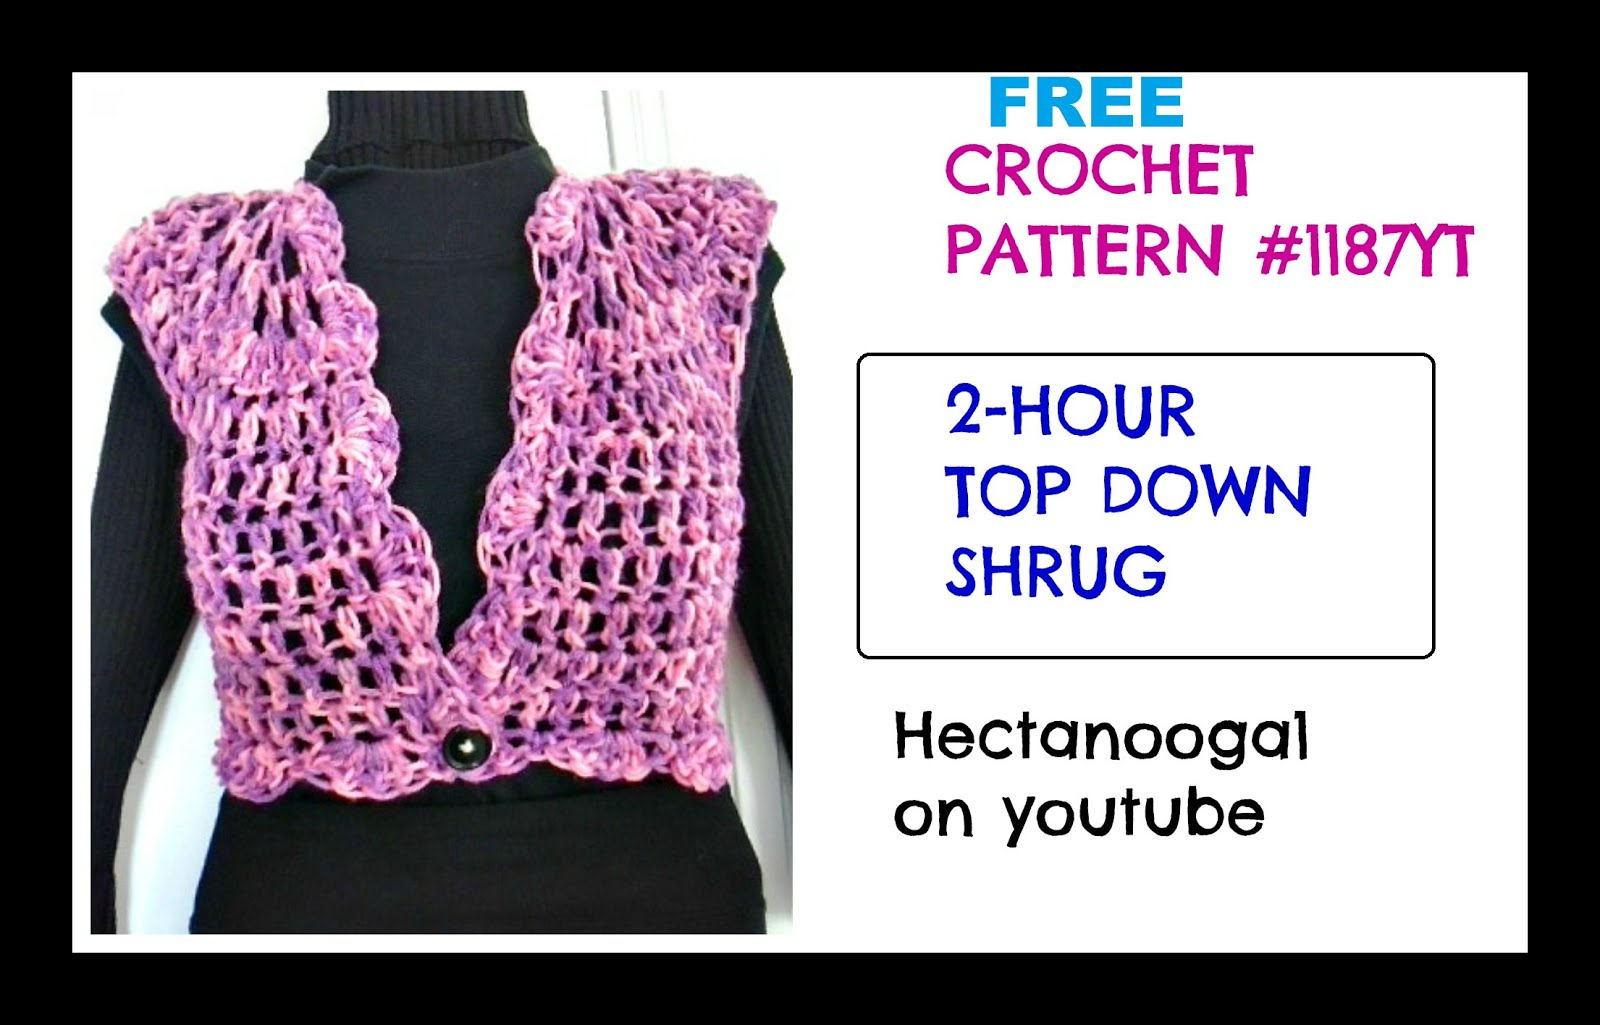 Free Crochet Shrug Patterns Hectanooga Patterns Free Crochet Pattern 1187yt Crochet Shrug